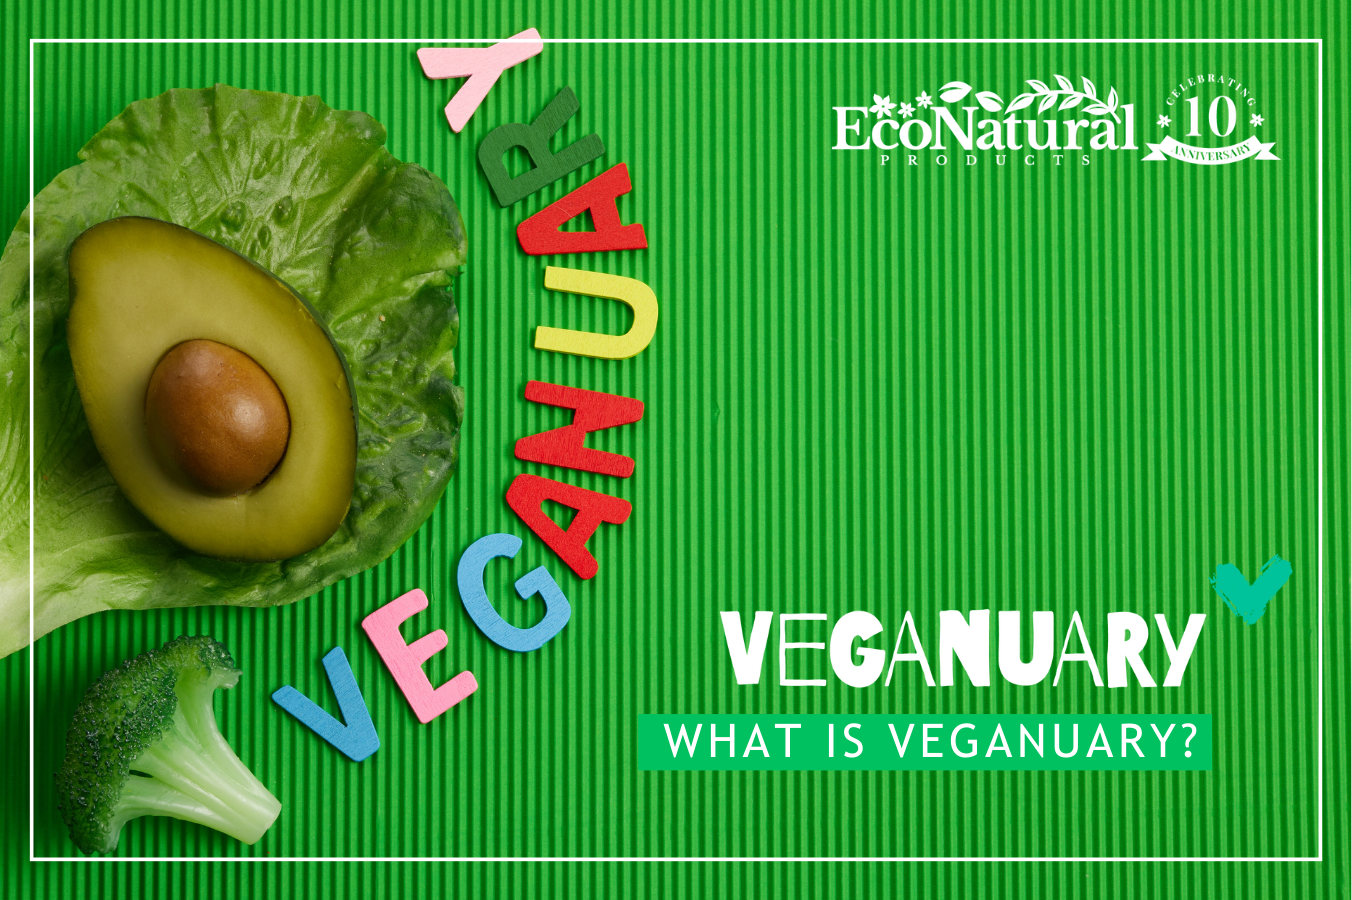 Veganuary: What is Veganuary?